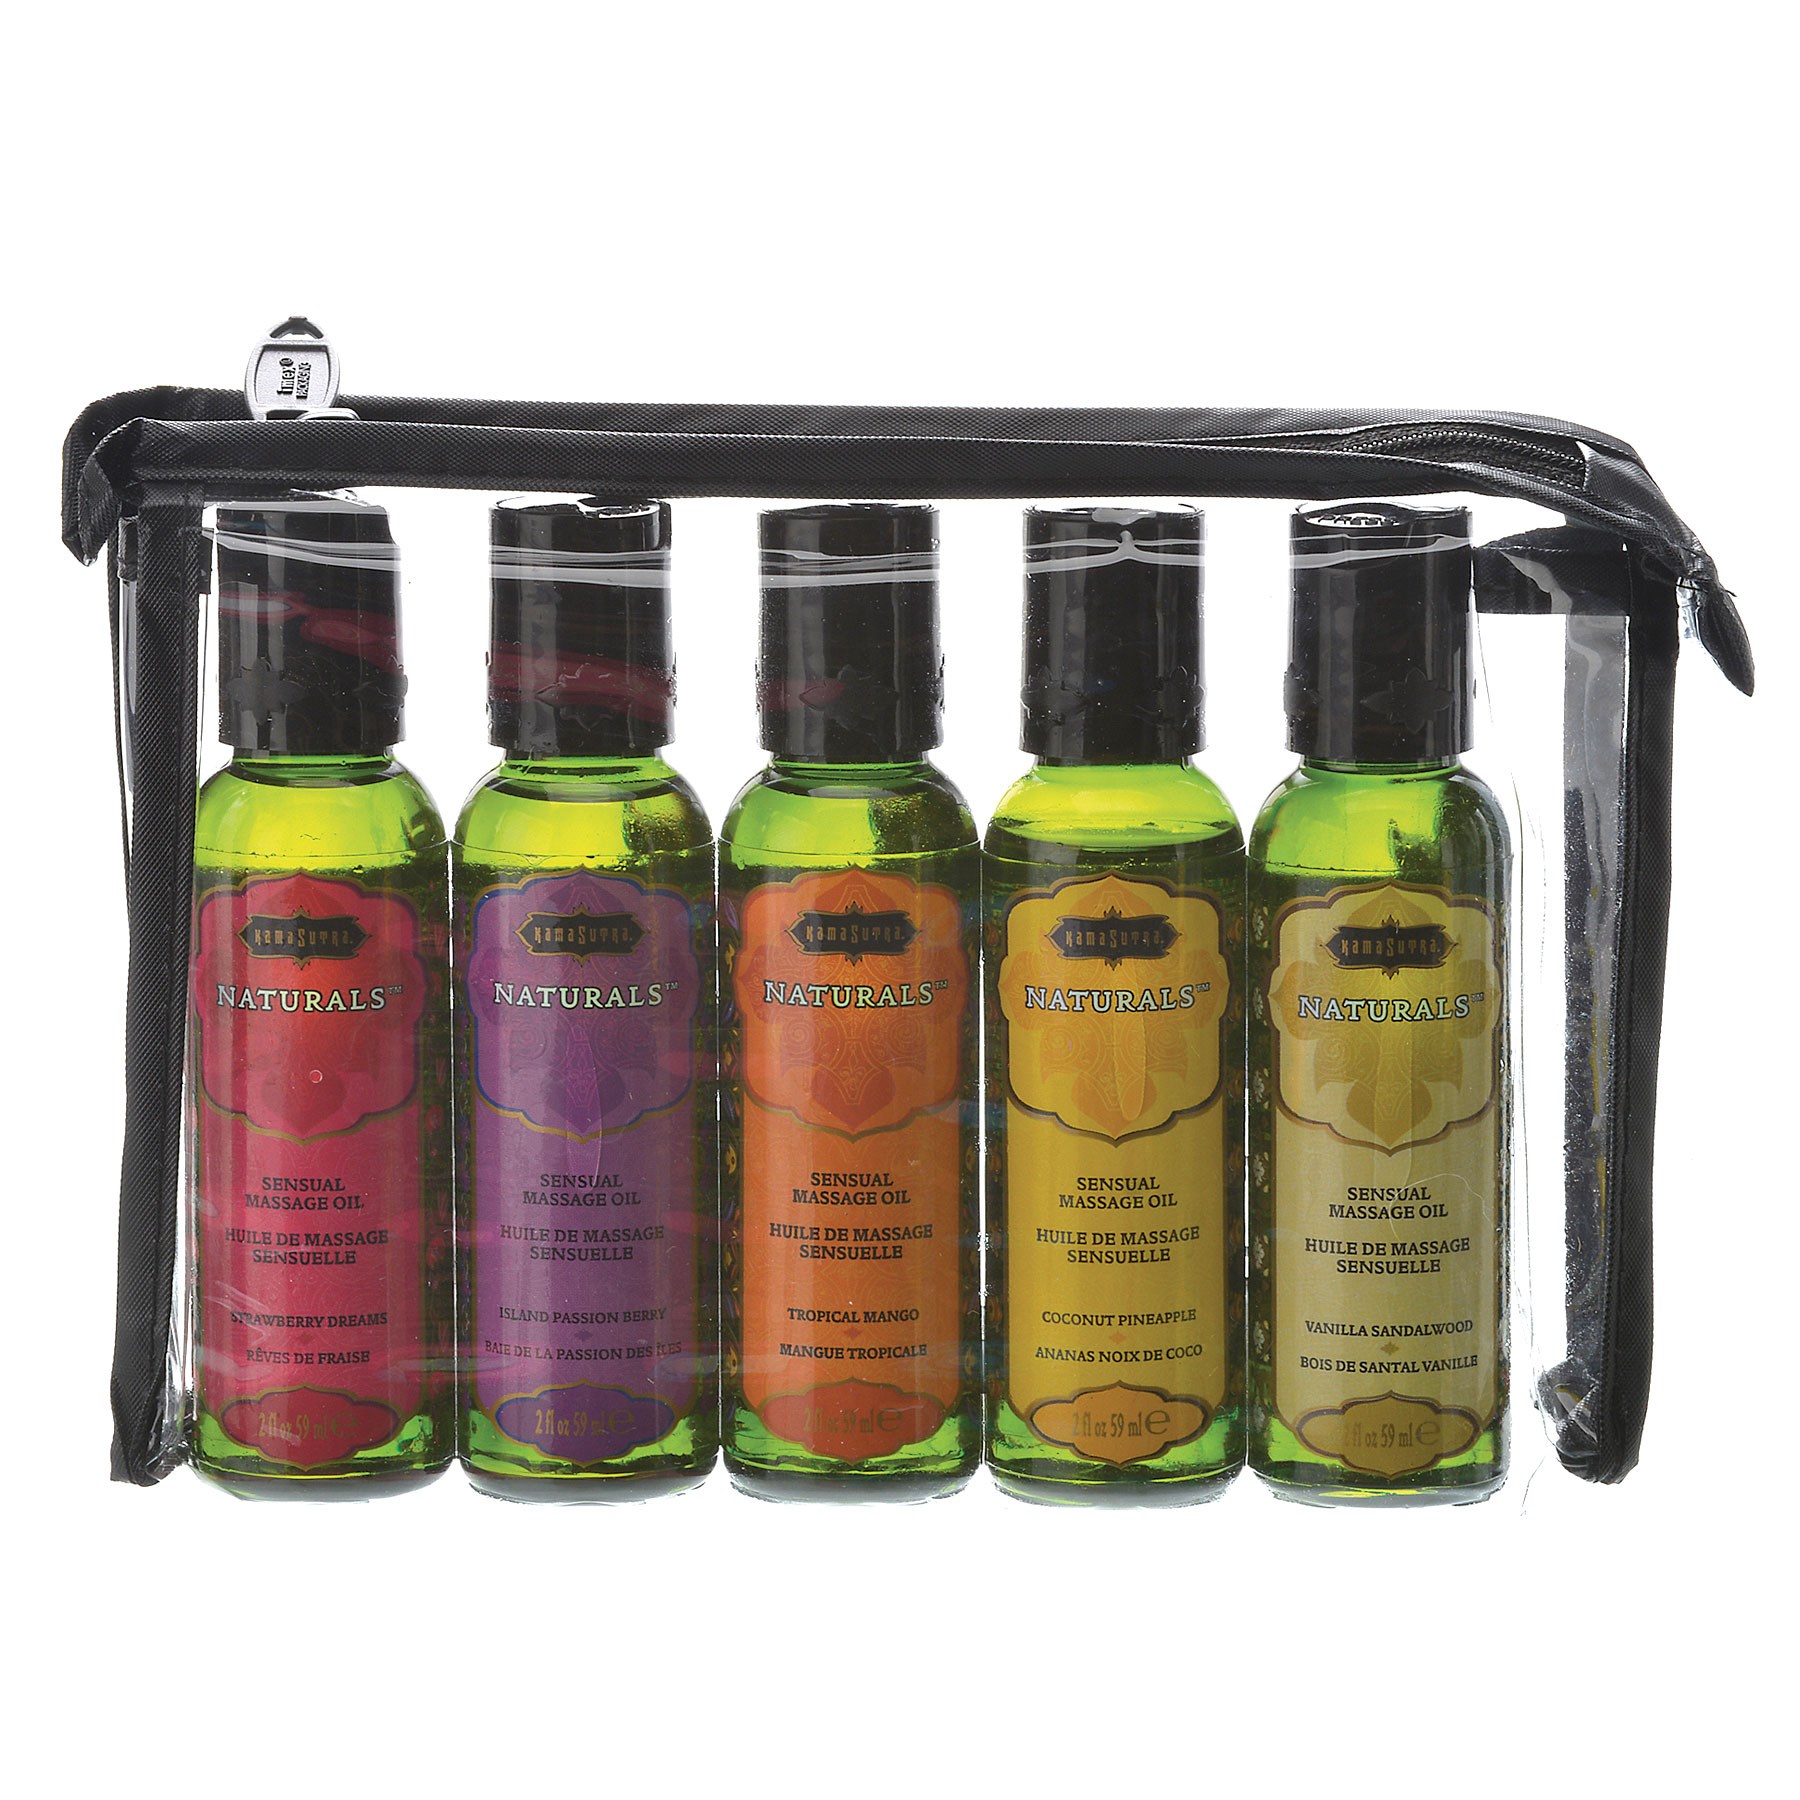 Kama Sutra Massage Indulgence bottles in travel pouch